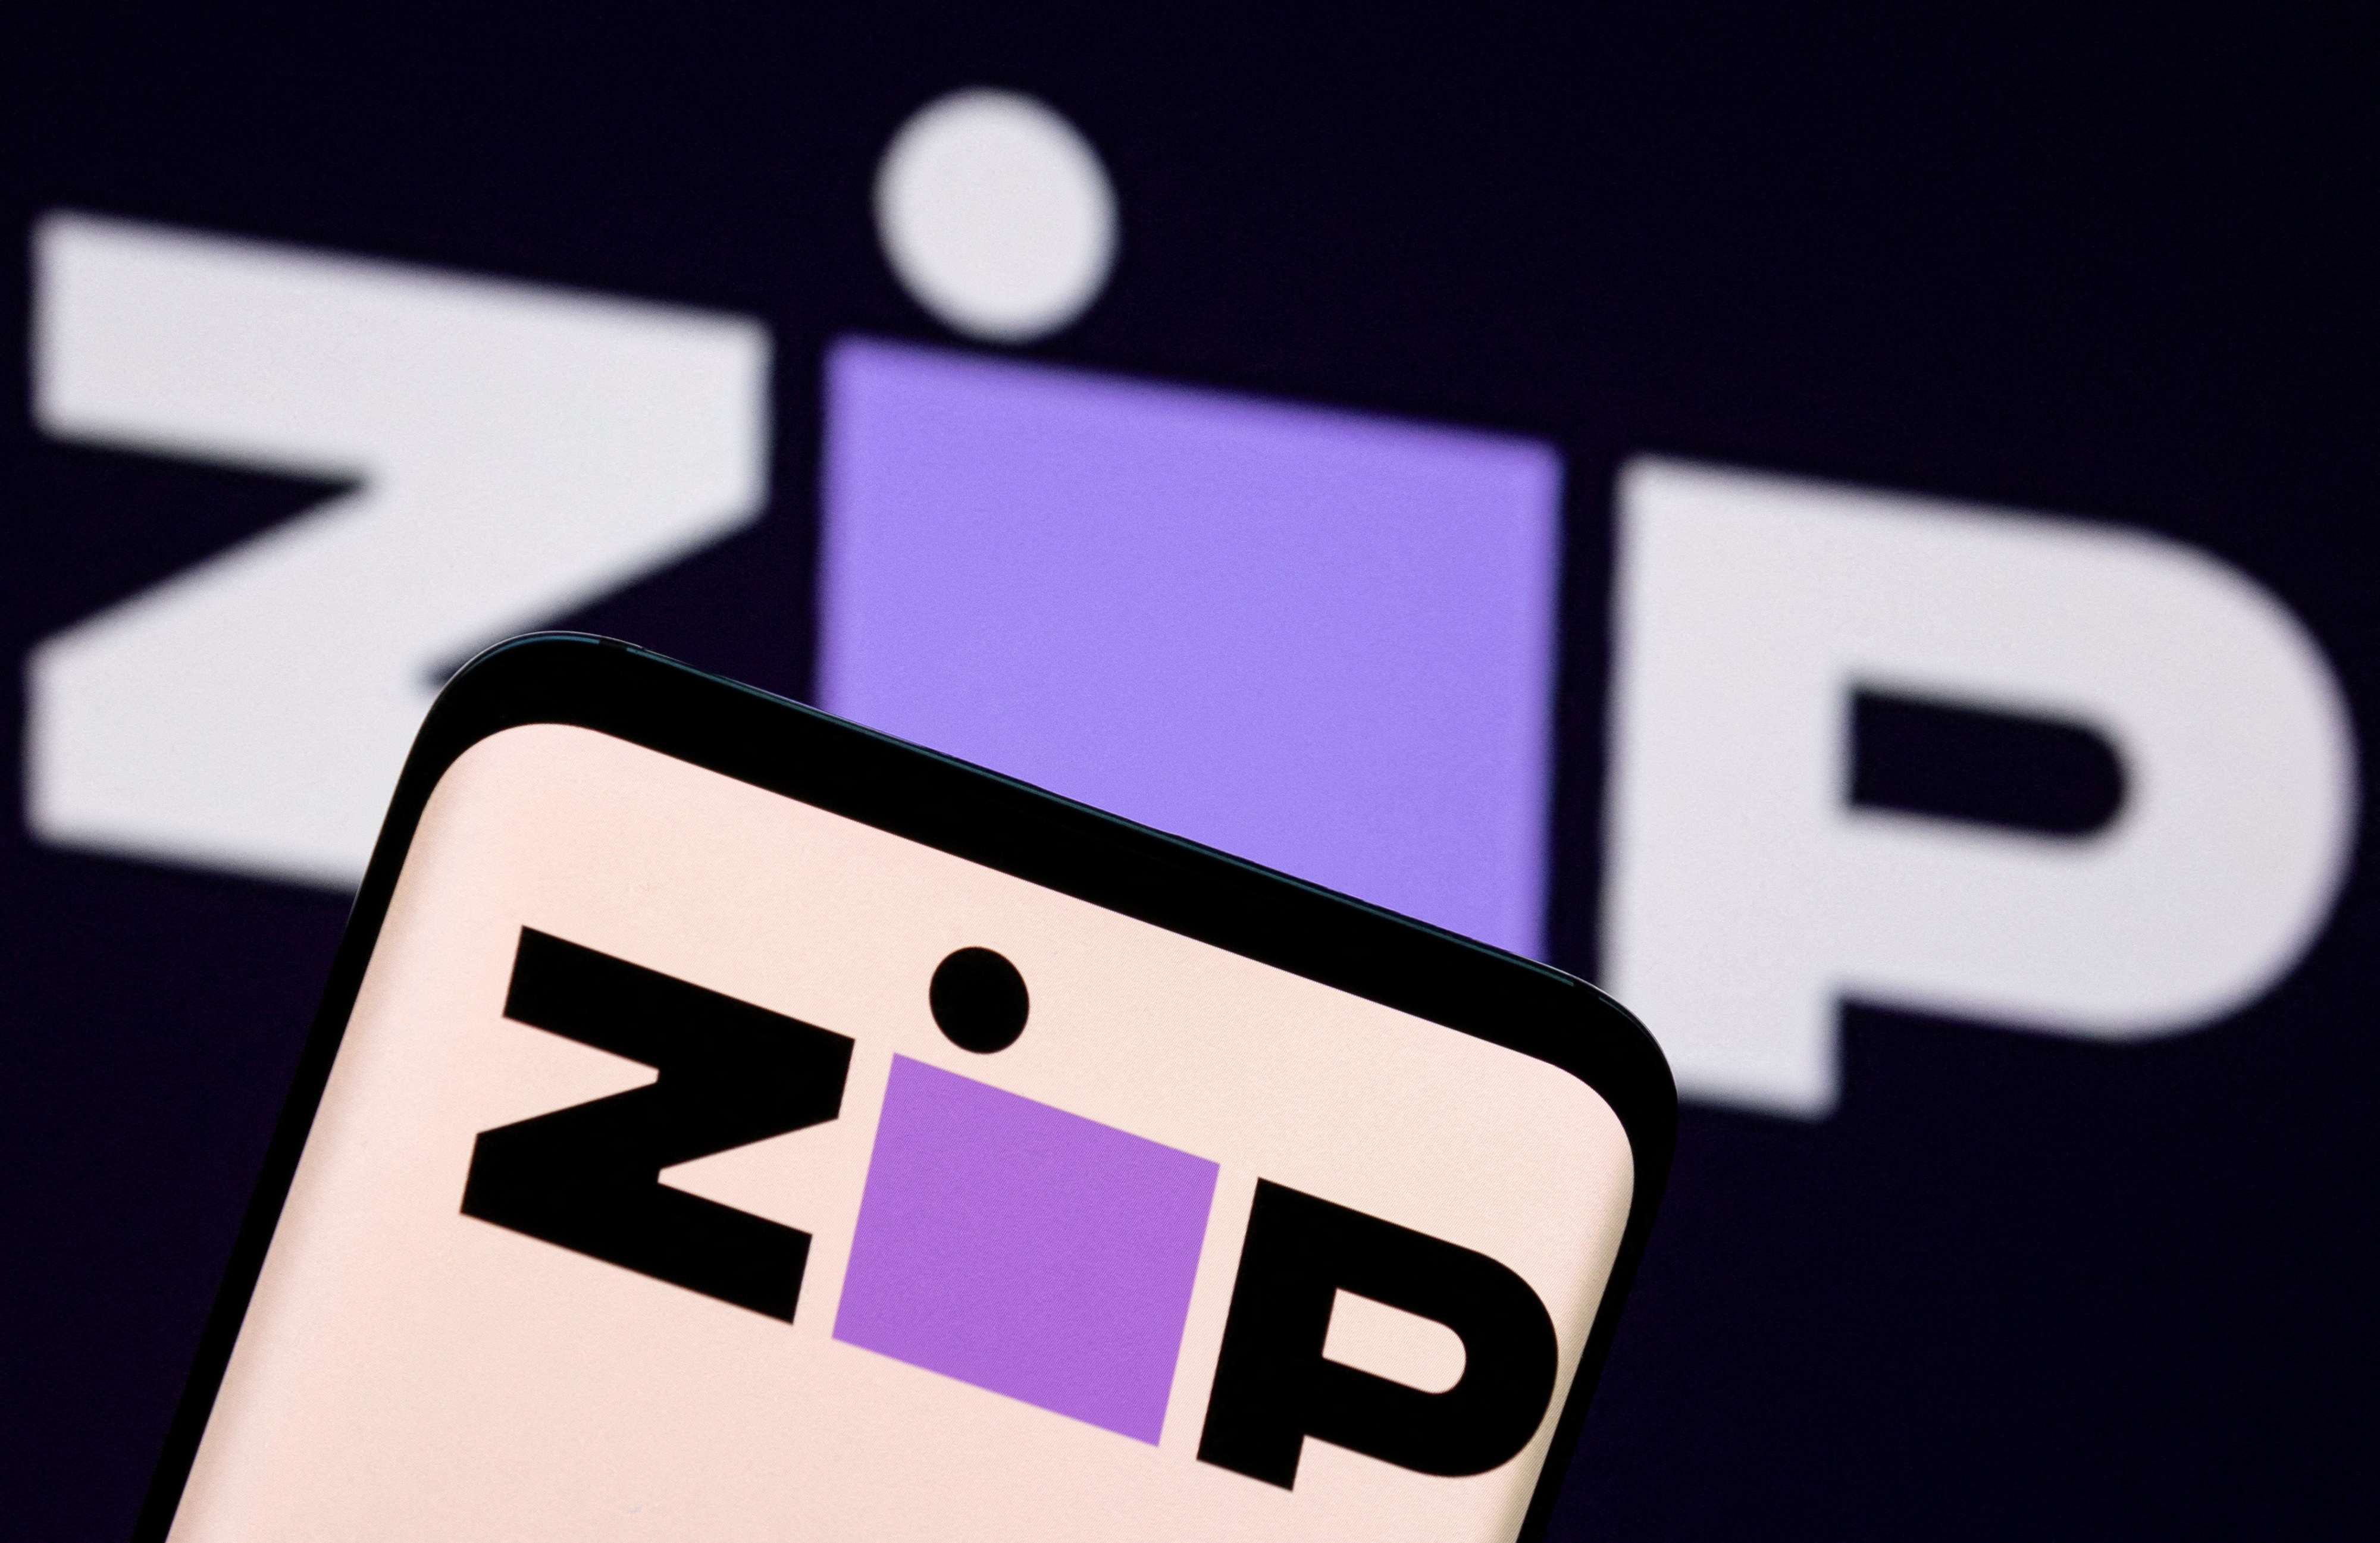 Illustration shows Zip logo